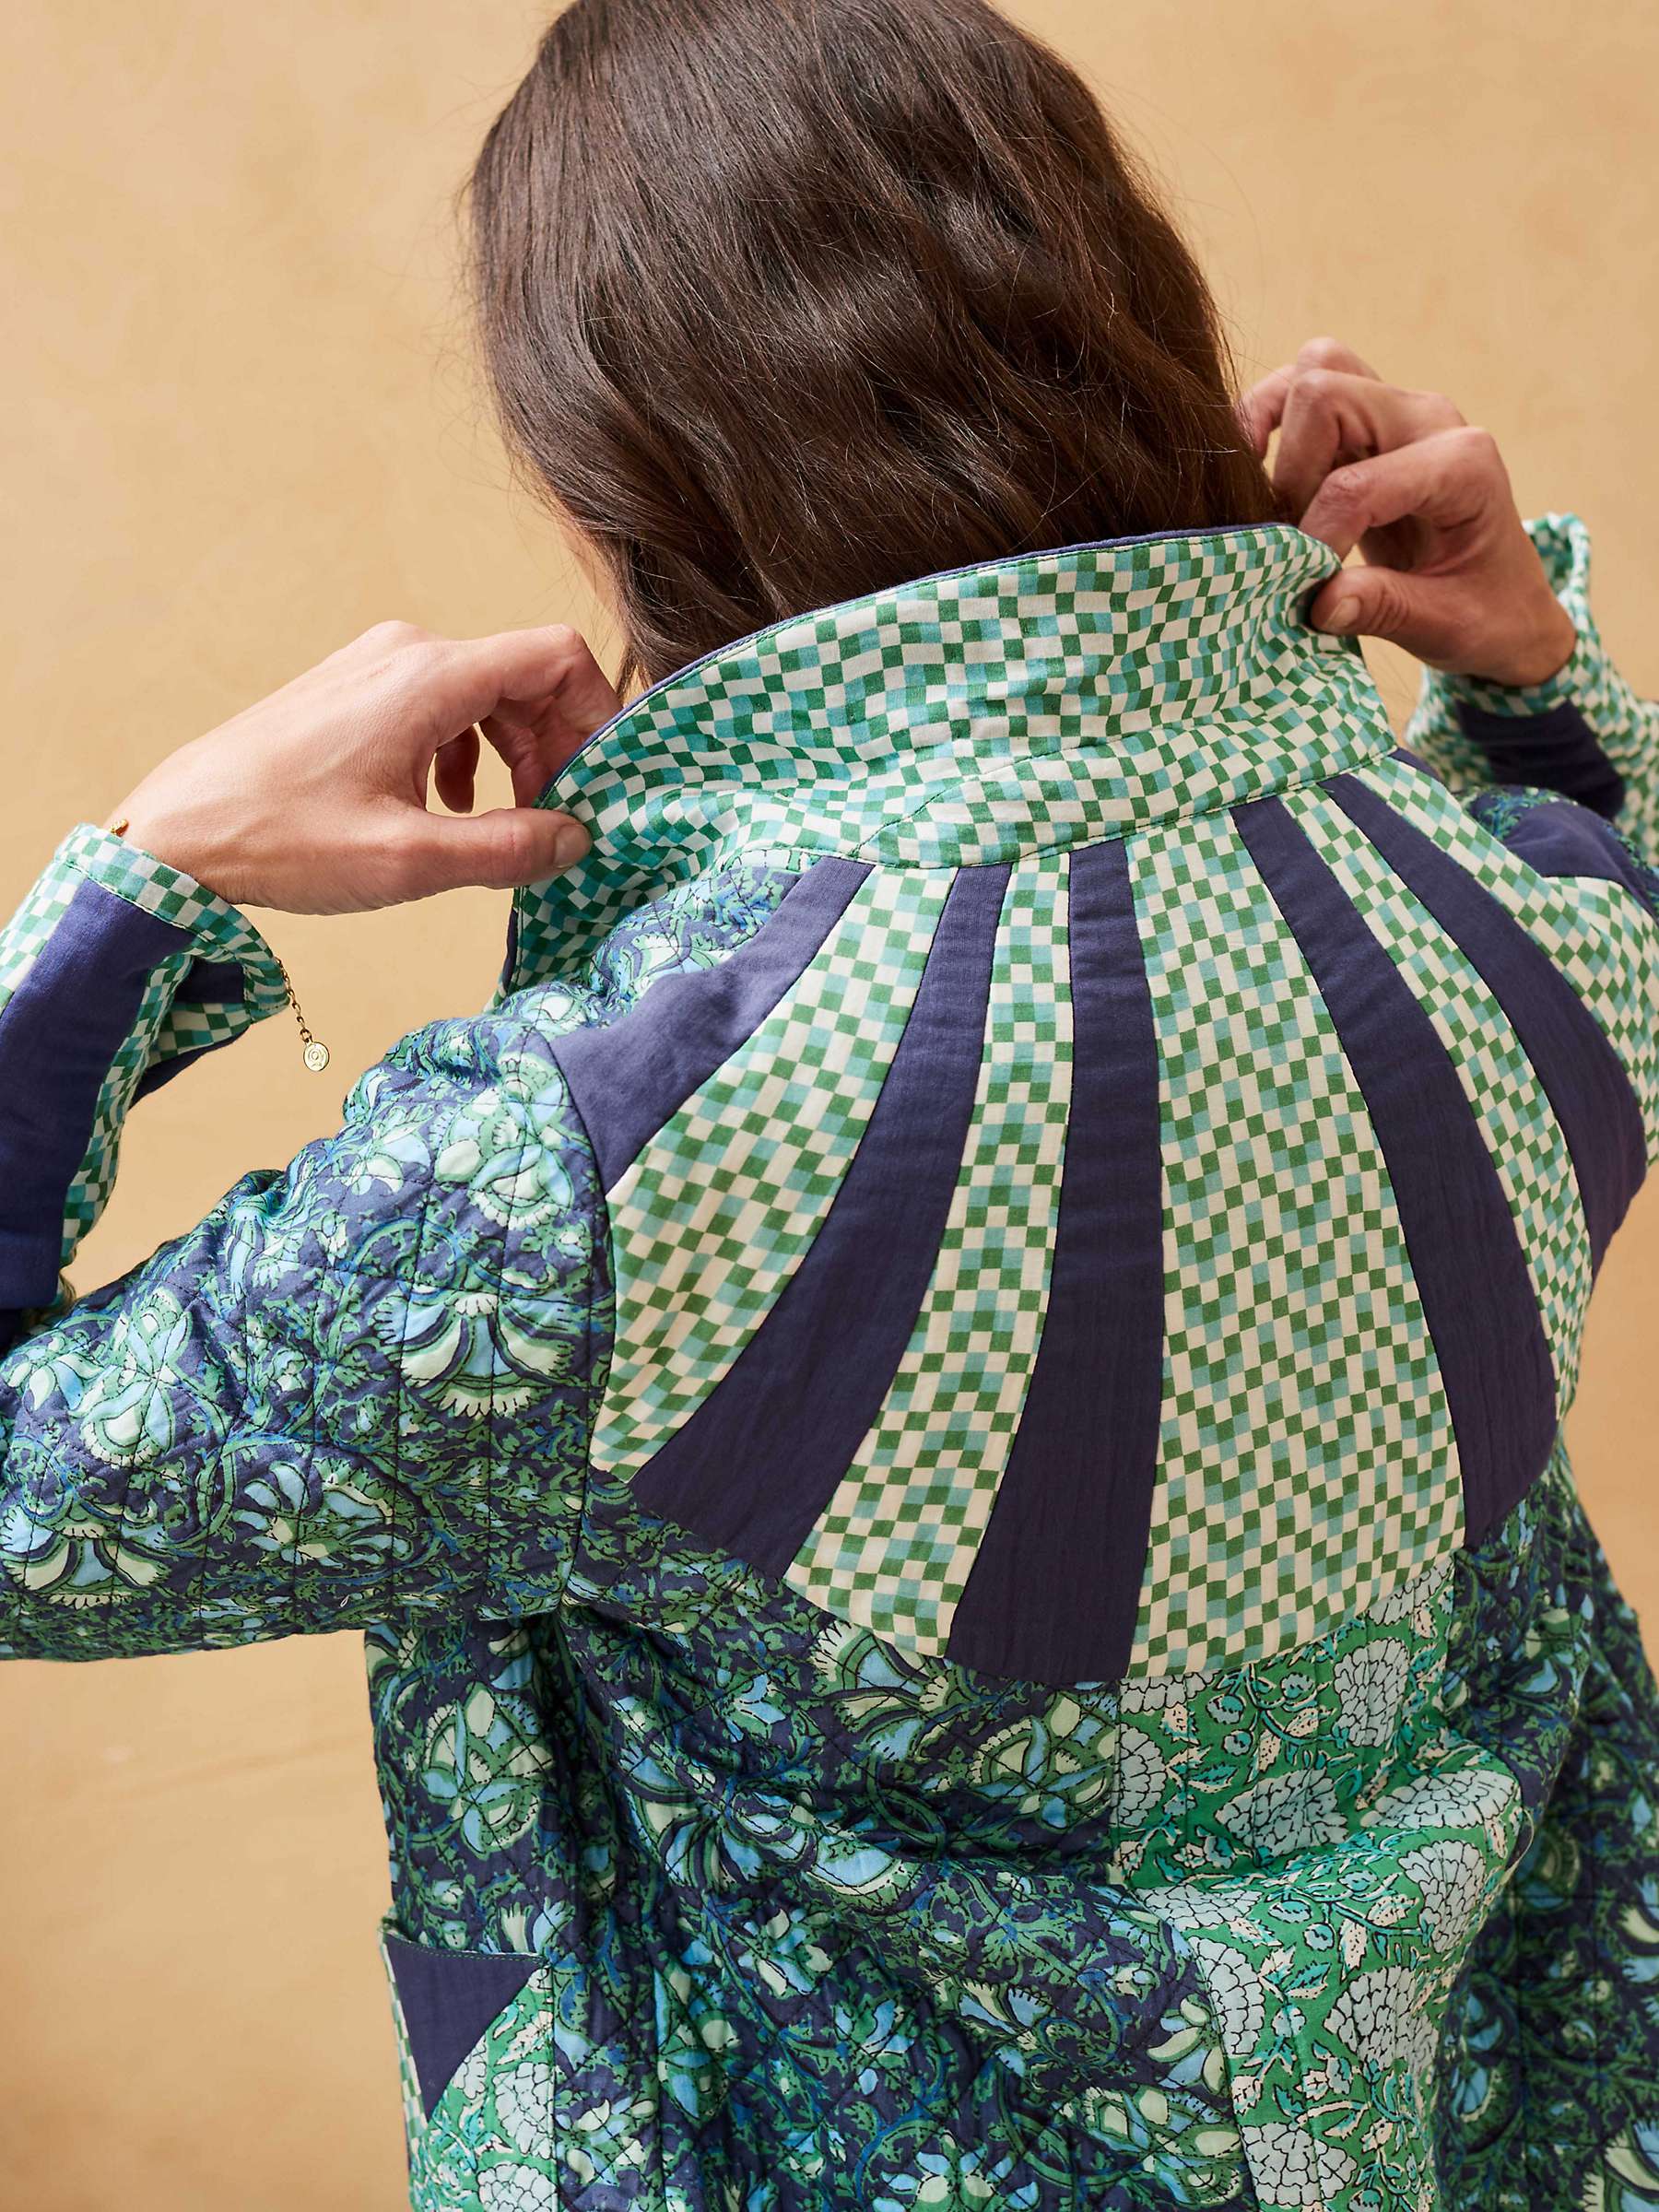 Buy Brora Cotton Block Print Quilted Jacket, Emerald/Multi Online at johnlewis.com